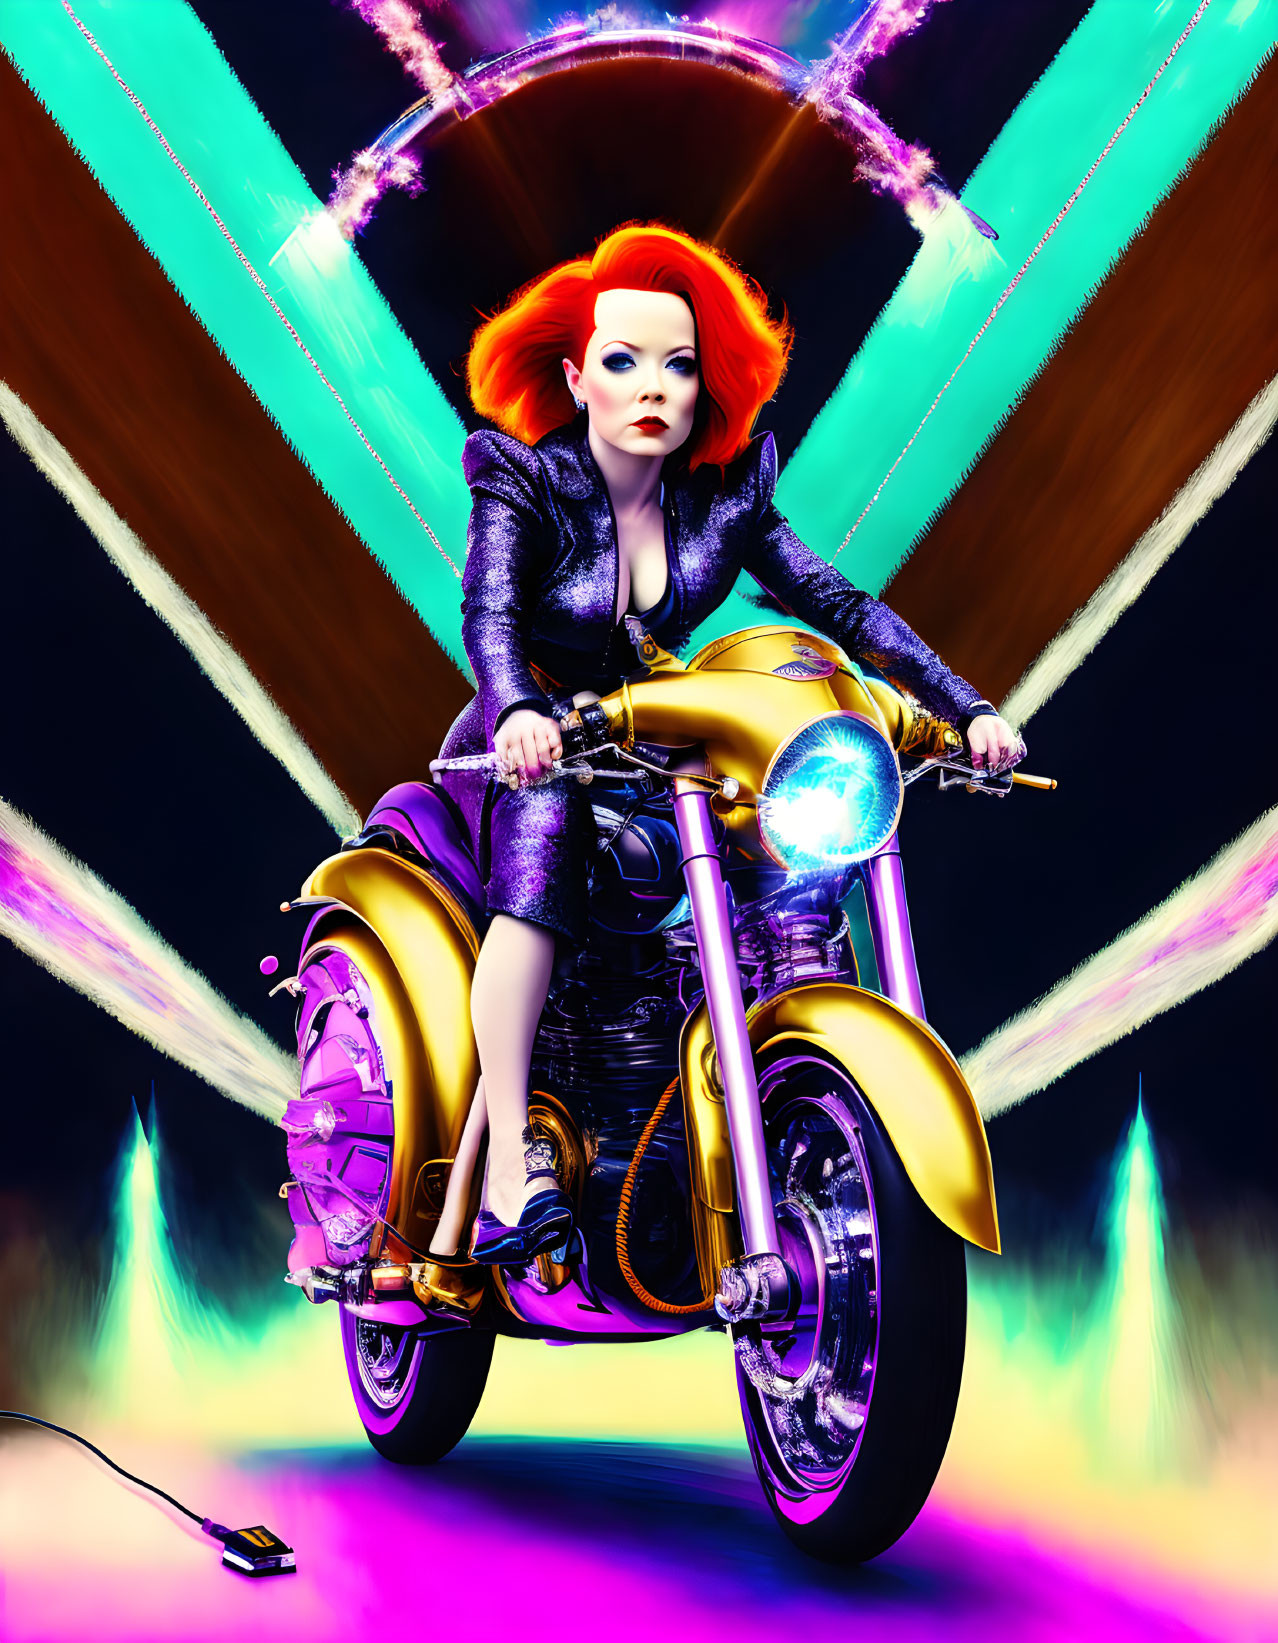 Character with orange hair on golden motorcycle in neon-lit scene